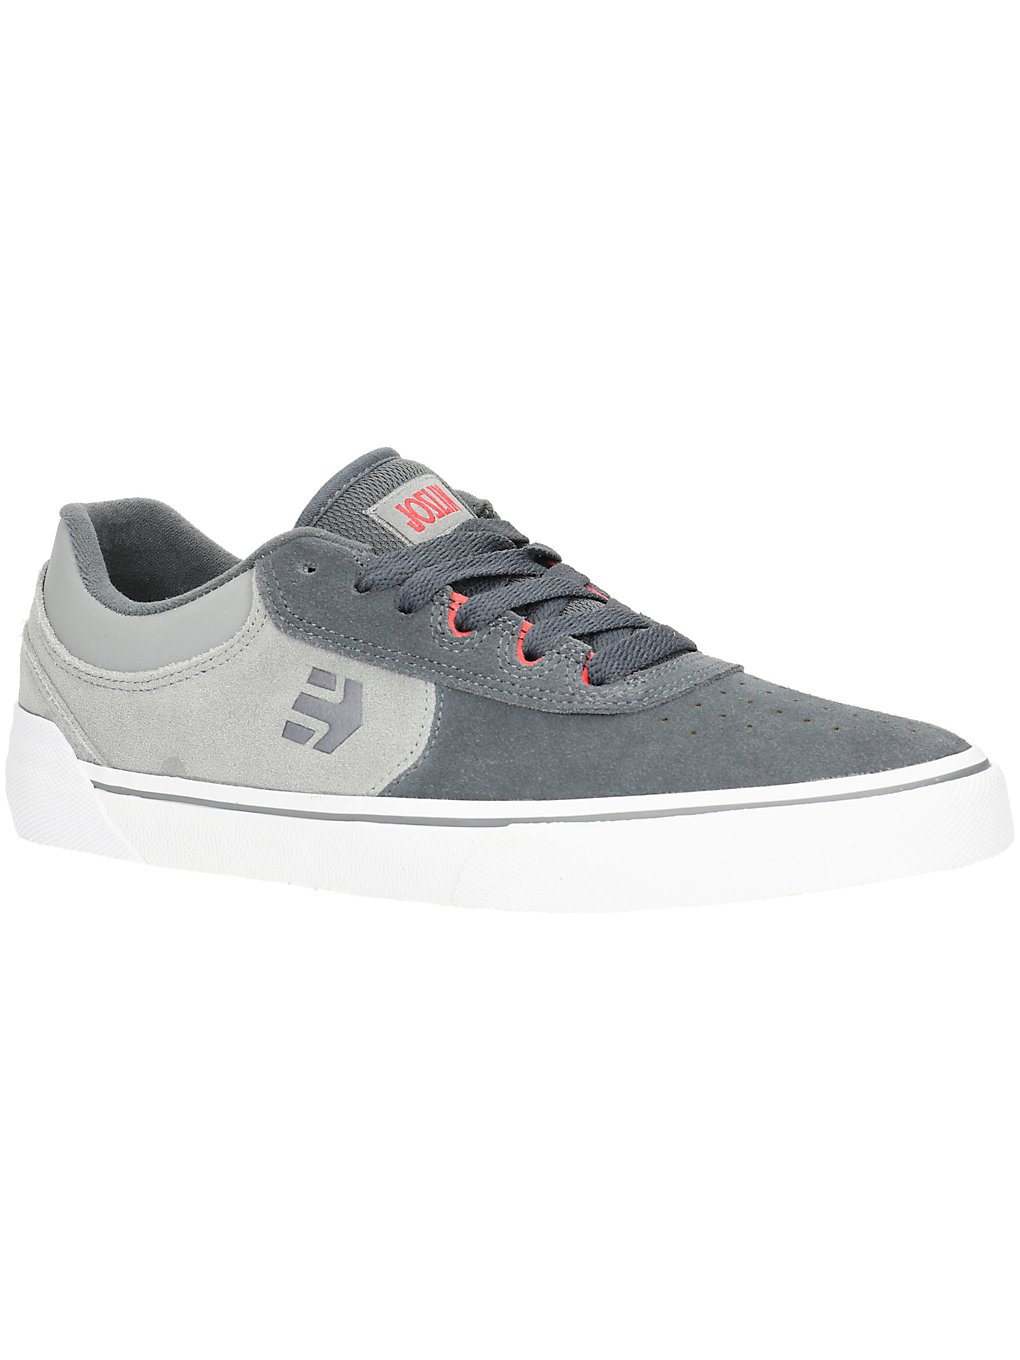 Etnies Joslin Vulc Skate Shoes dark grey/grey